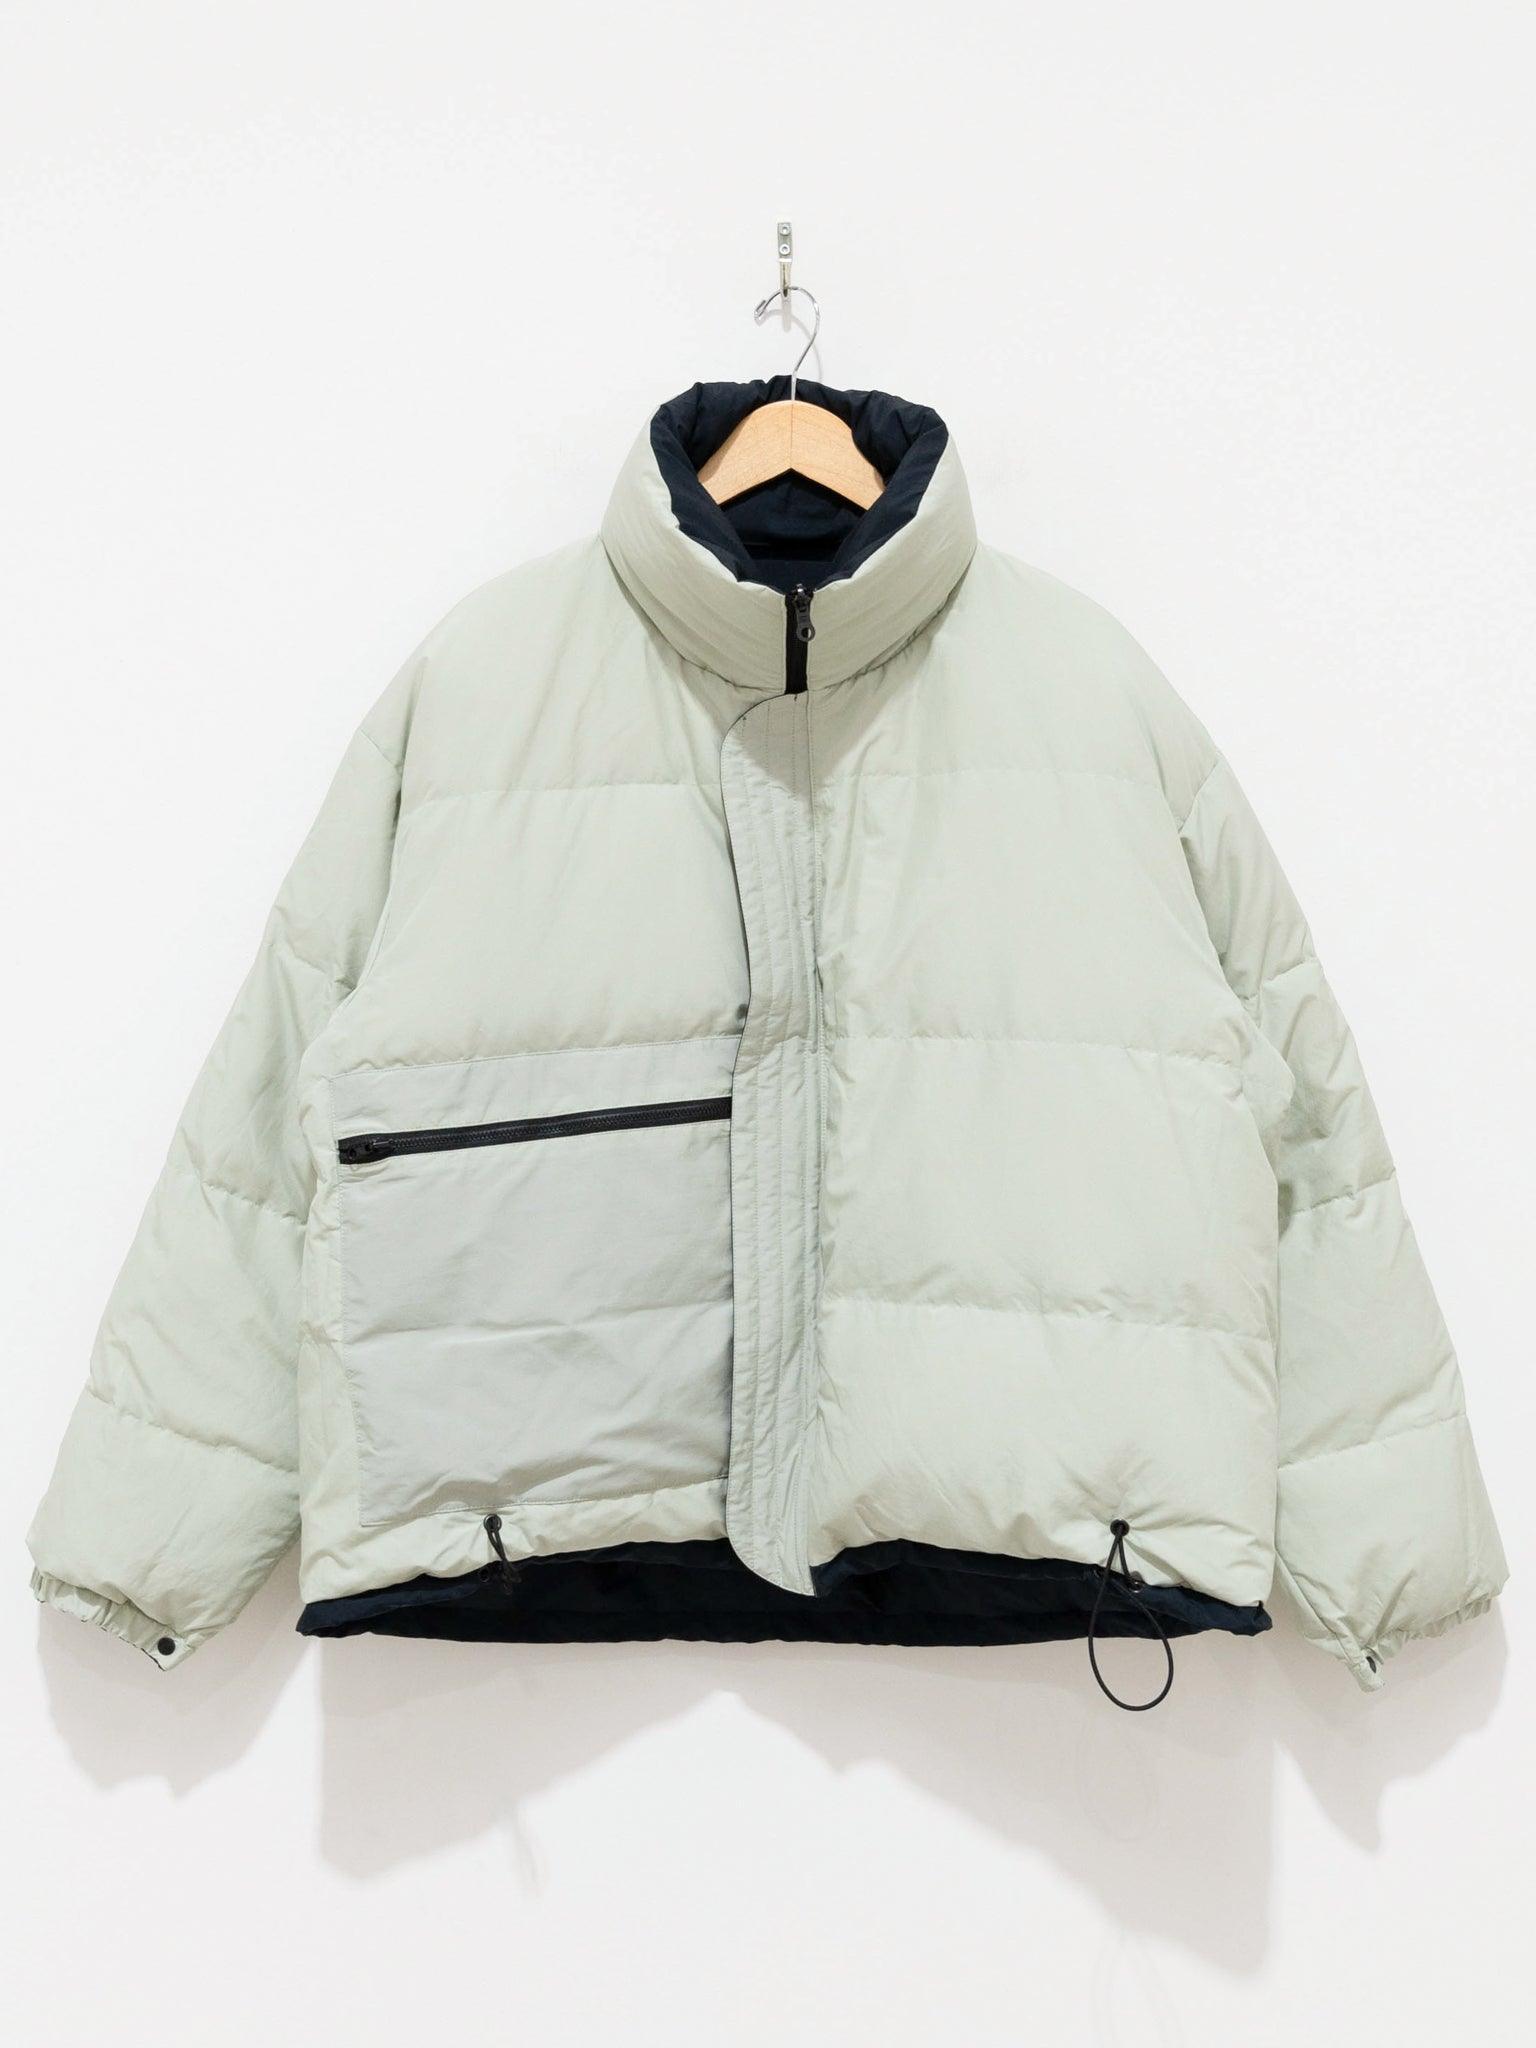 Namu Shop - Kaptain Sunshine Reversible Mont Blanc Puffer Down Jacket - Navy/Mint